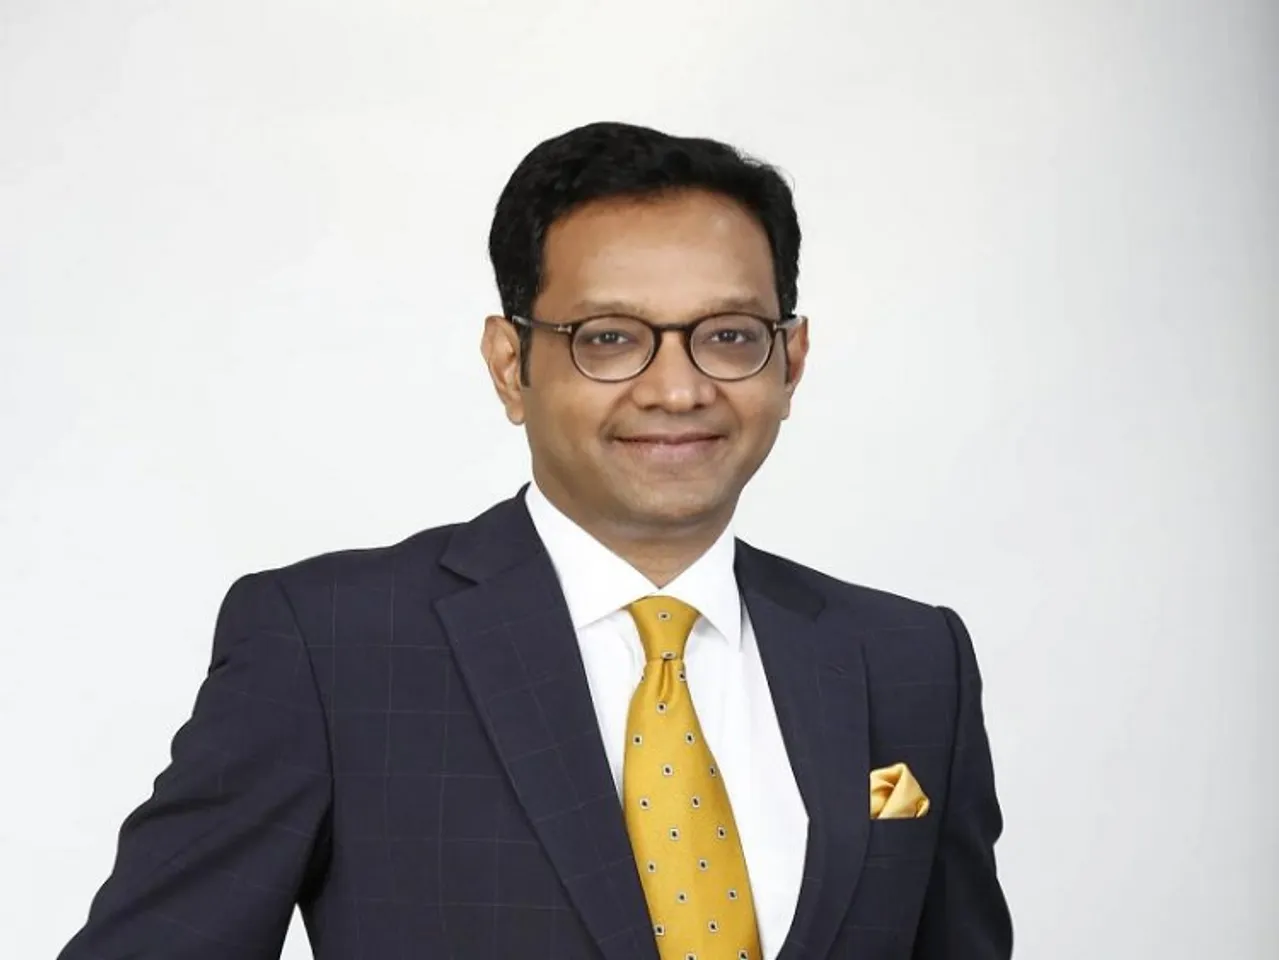  Anuj Poddar, Managing Director and CEO of Bajaj Electricals